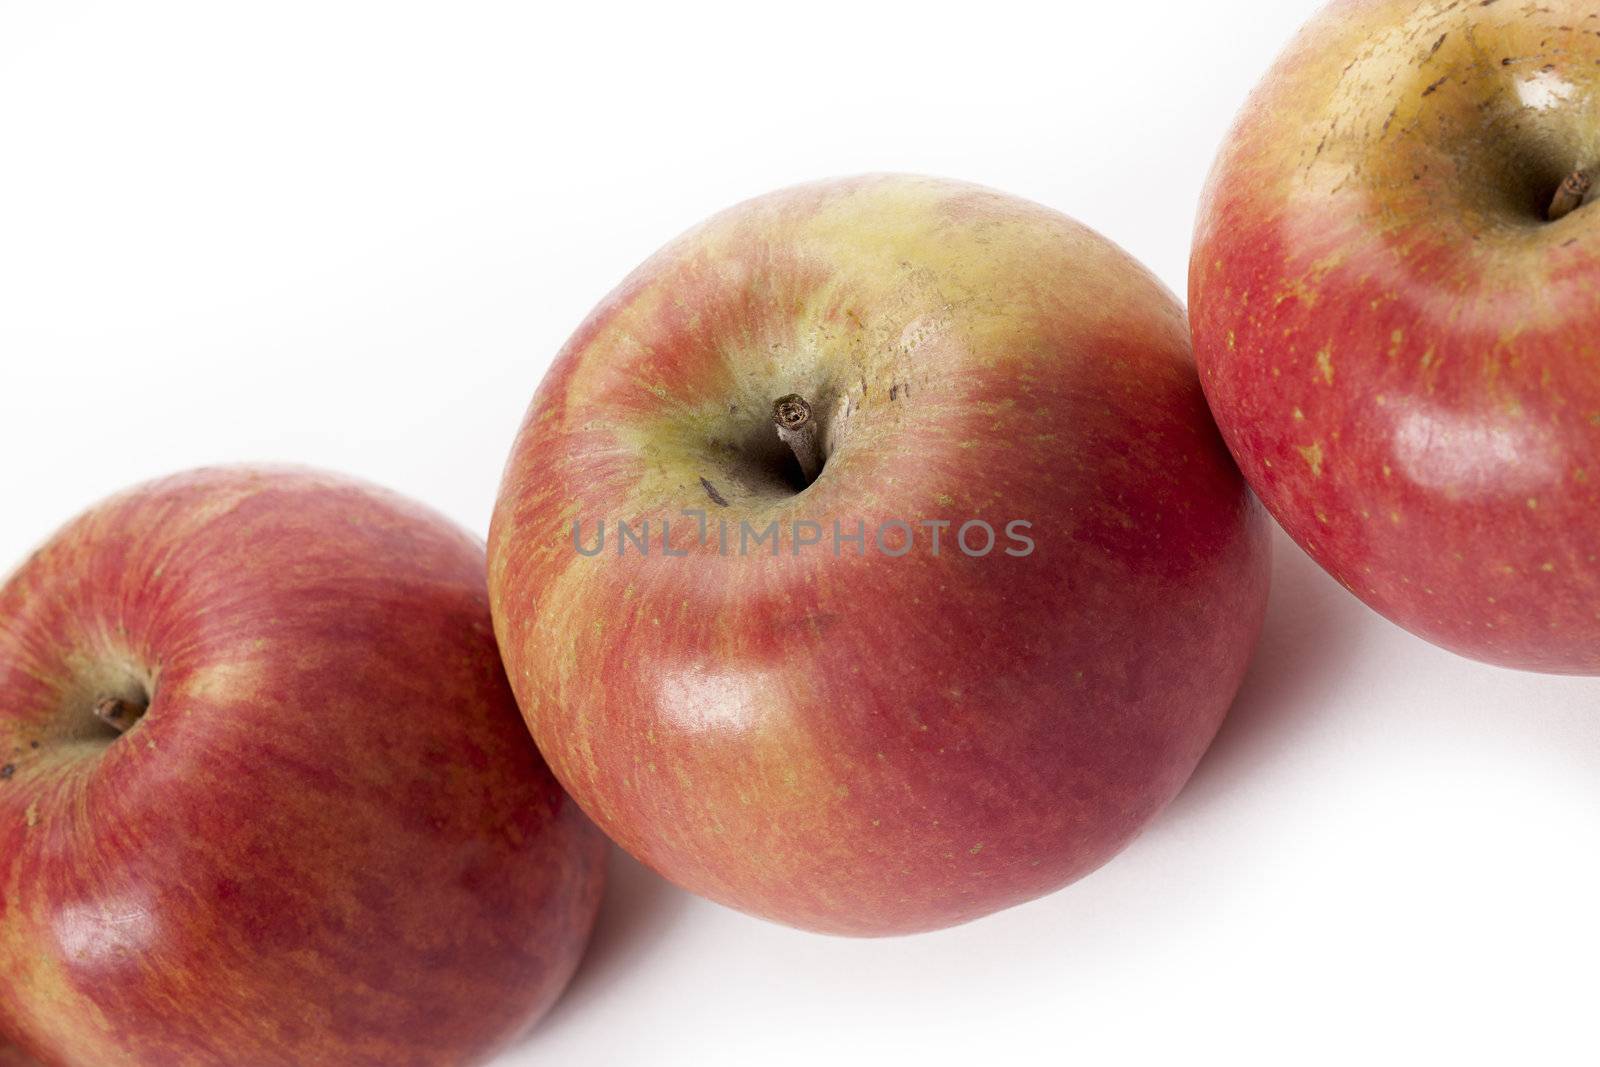 gala apples by kozzi